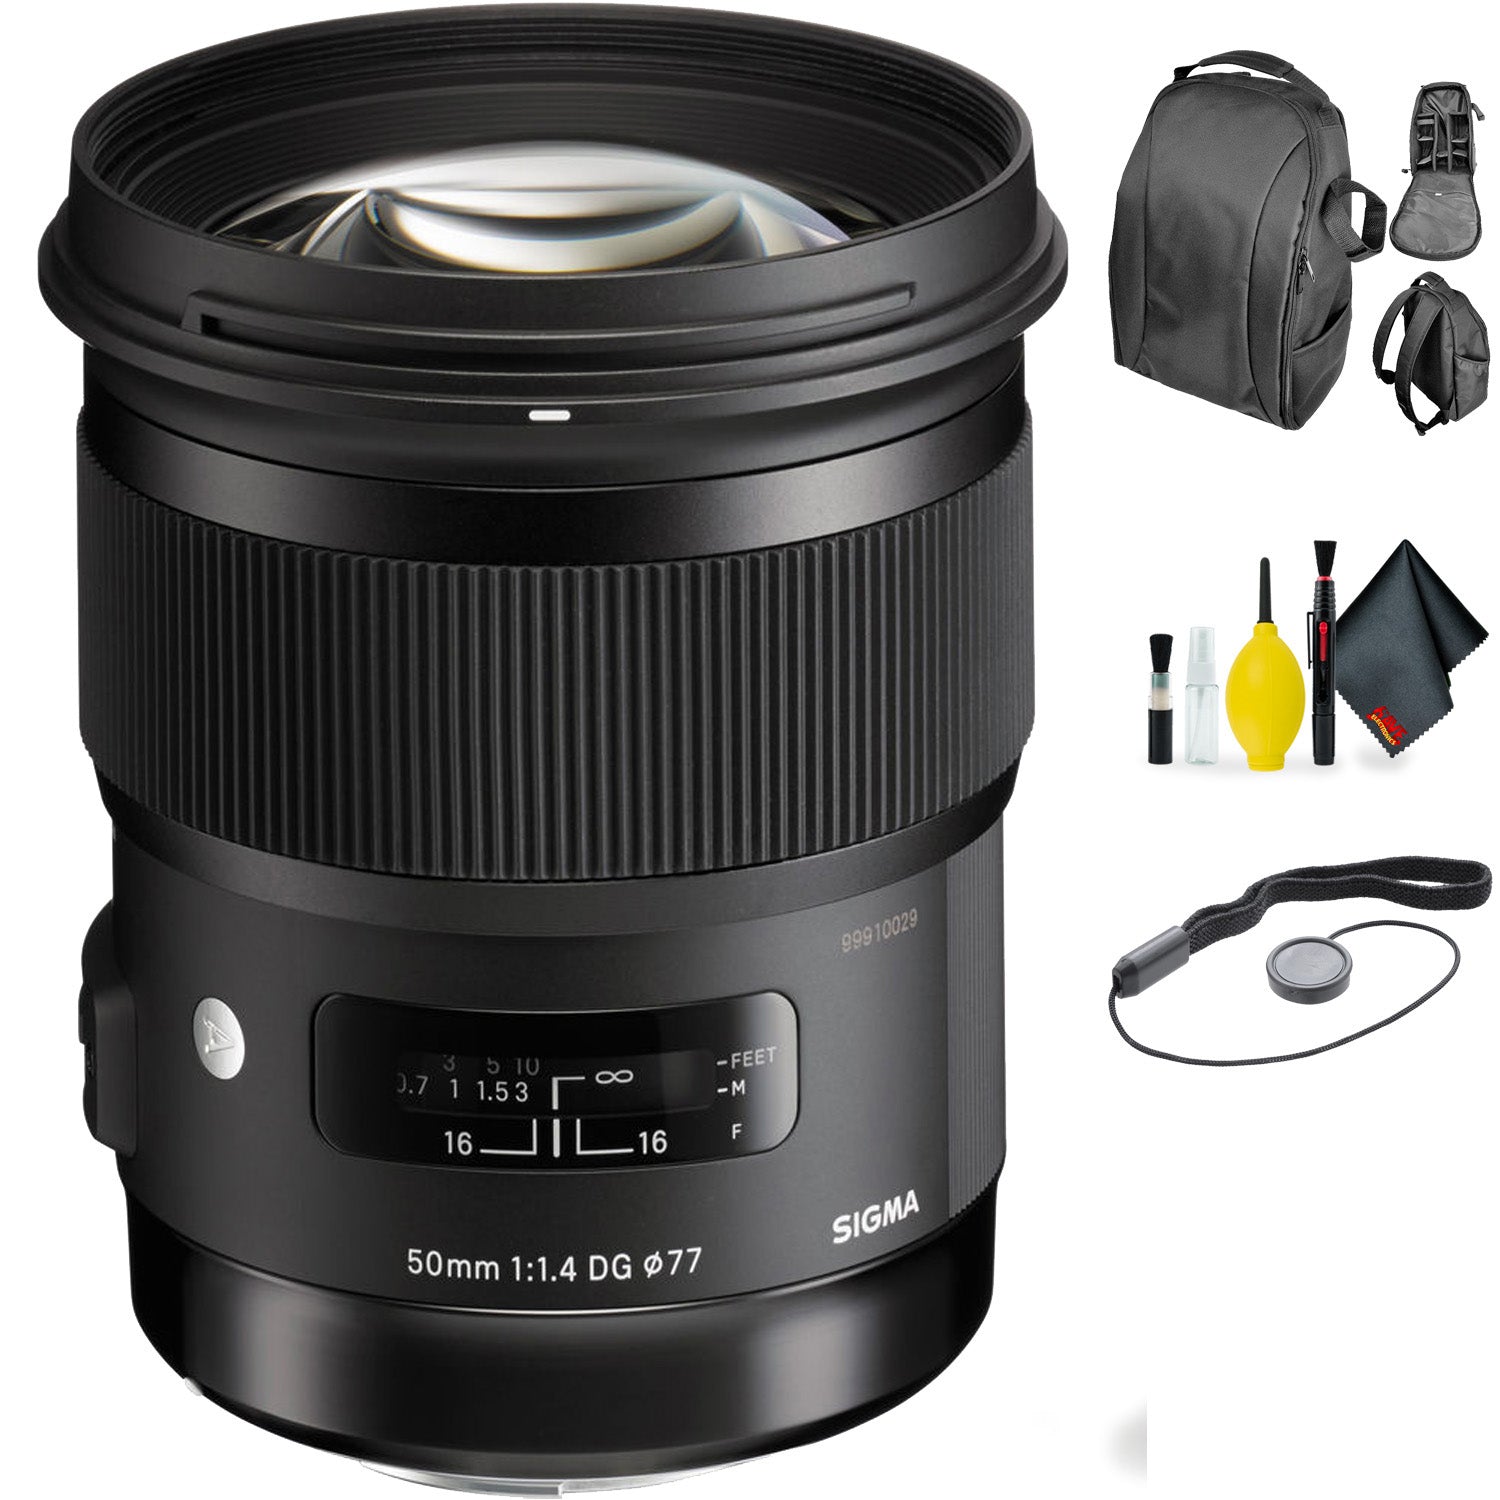 Sigma 50mm f/1.4 DG HSM Art Lens for Nikon + Deluxe Lens Cleaning Kit Bundle